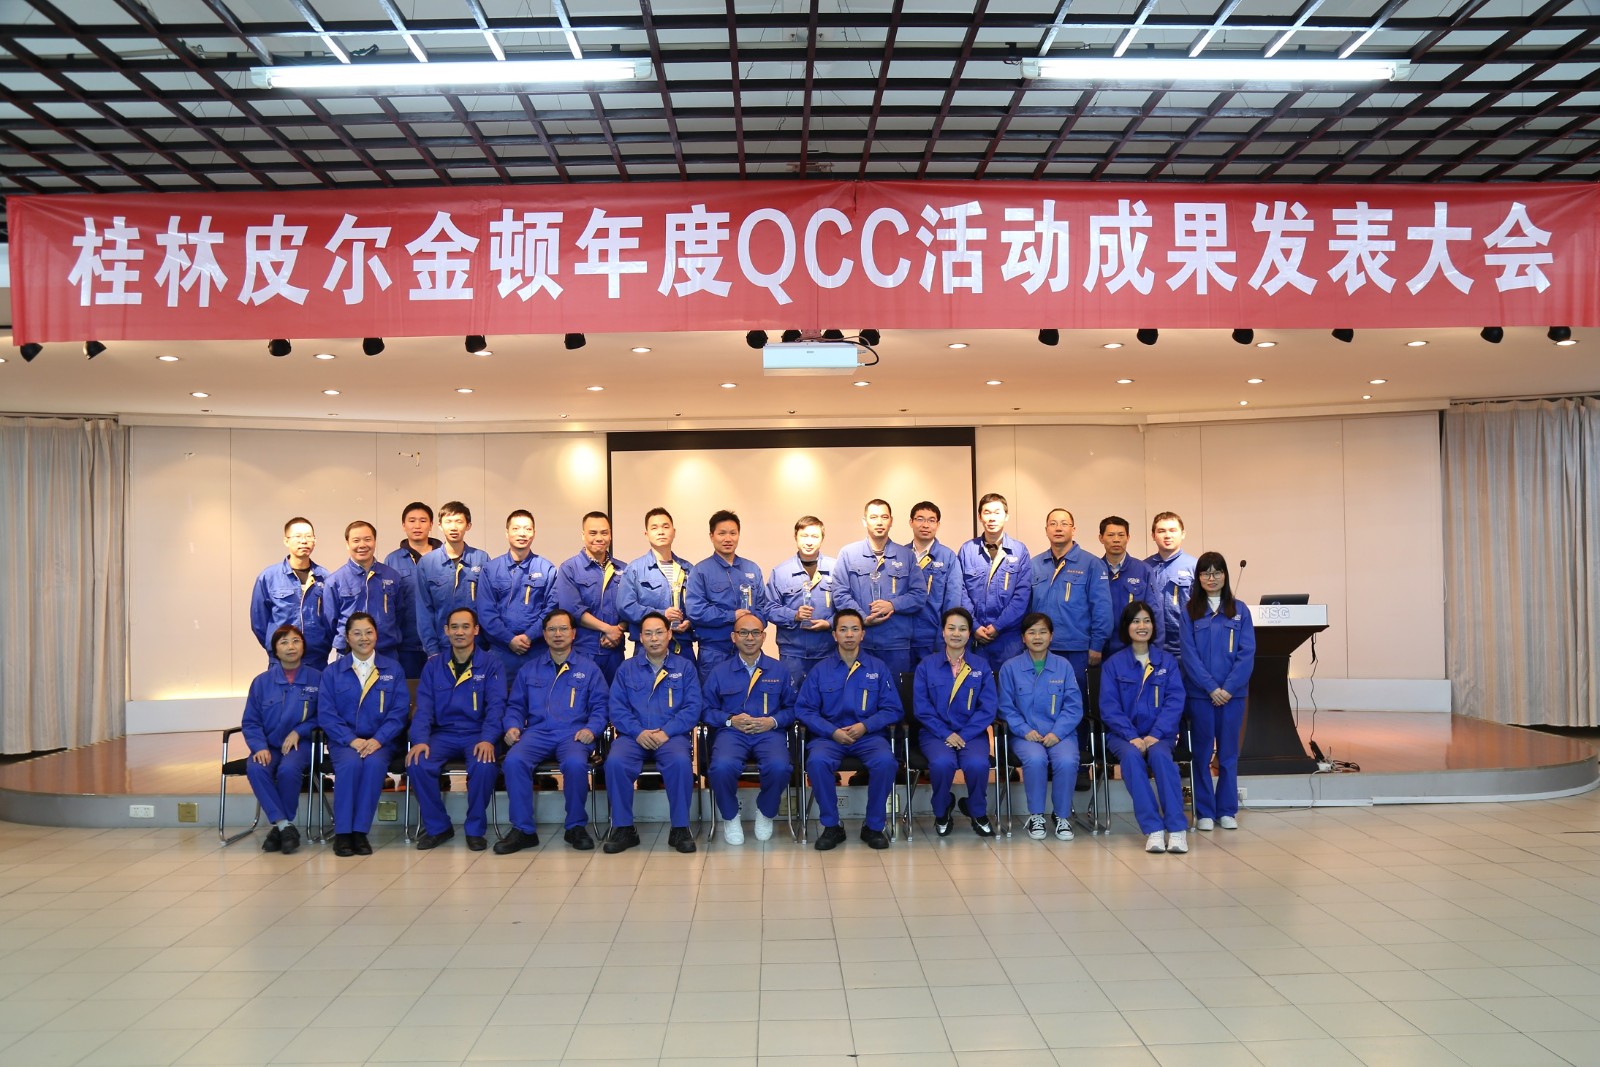 FY22桂林工厂QCC成果发表会-小.jpg